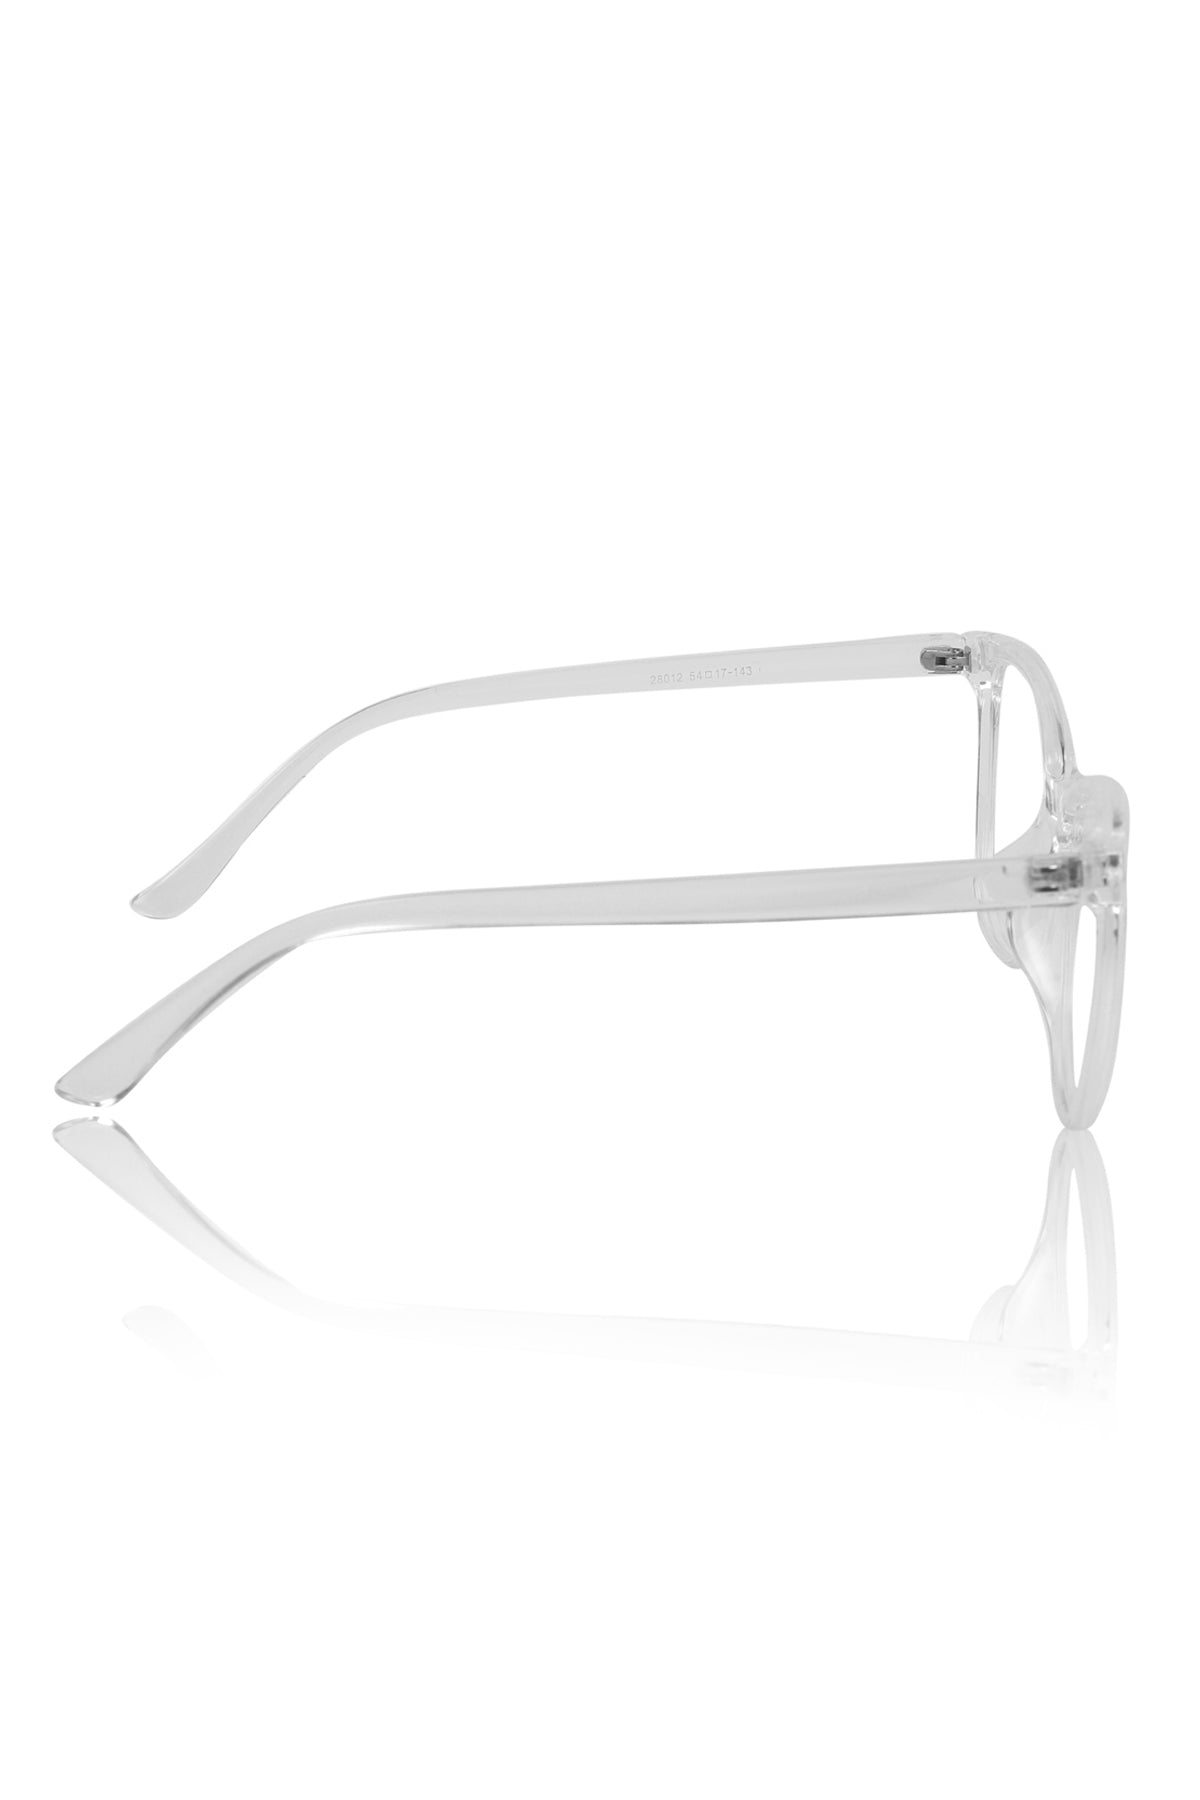 Jodykoes® Stylish Looking Over size Cat Eye Spectcale Frame | Anti Glare Computer Protection Eyewear Eyeglasses For Women (Transparent) - Jodykoes ®